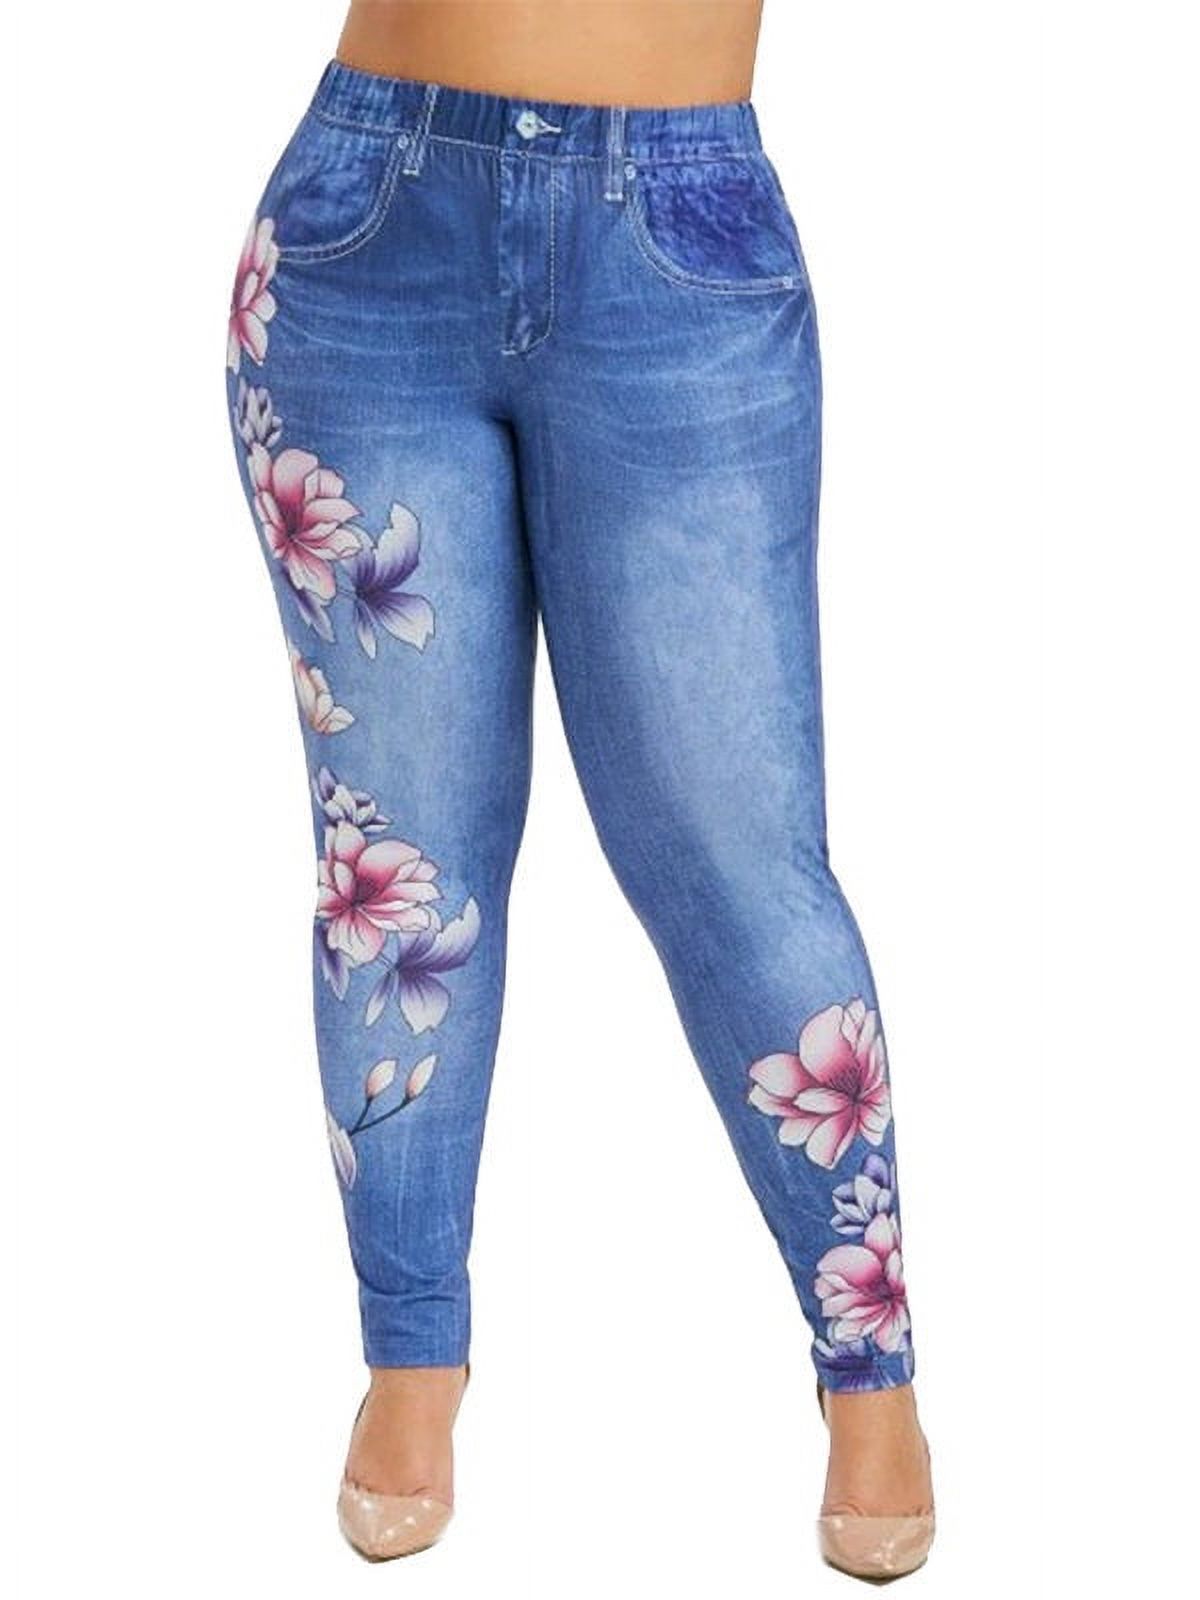 Julycc Women Casual 3D Denim Plus Size Floral Print Leggings - image 3 of 4